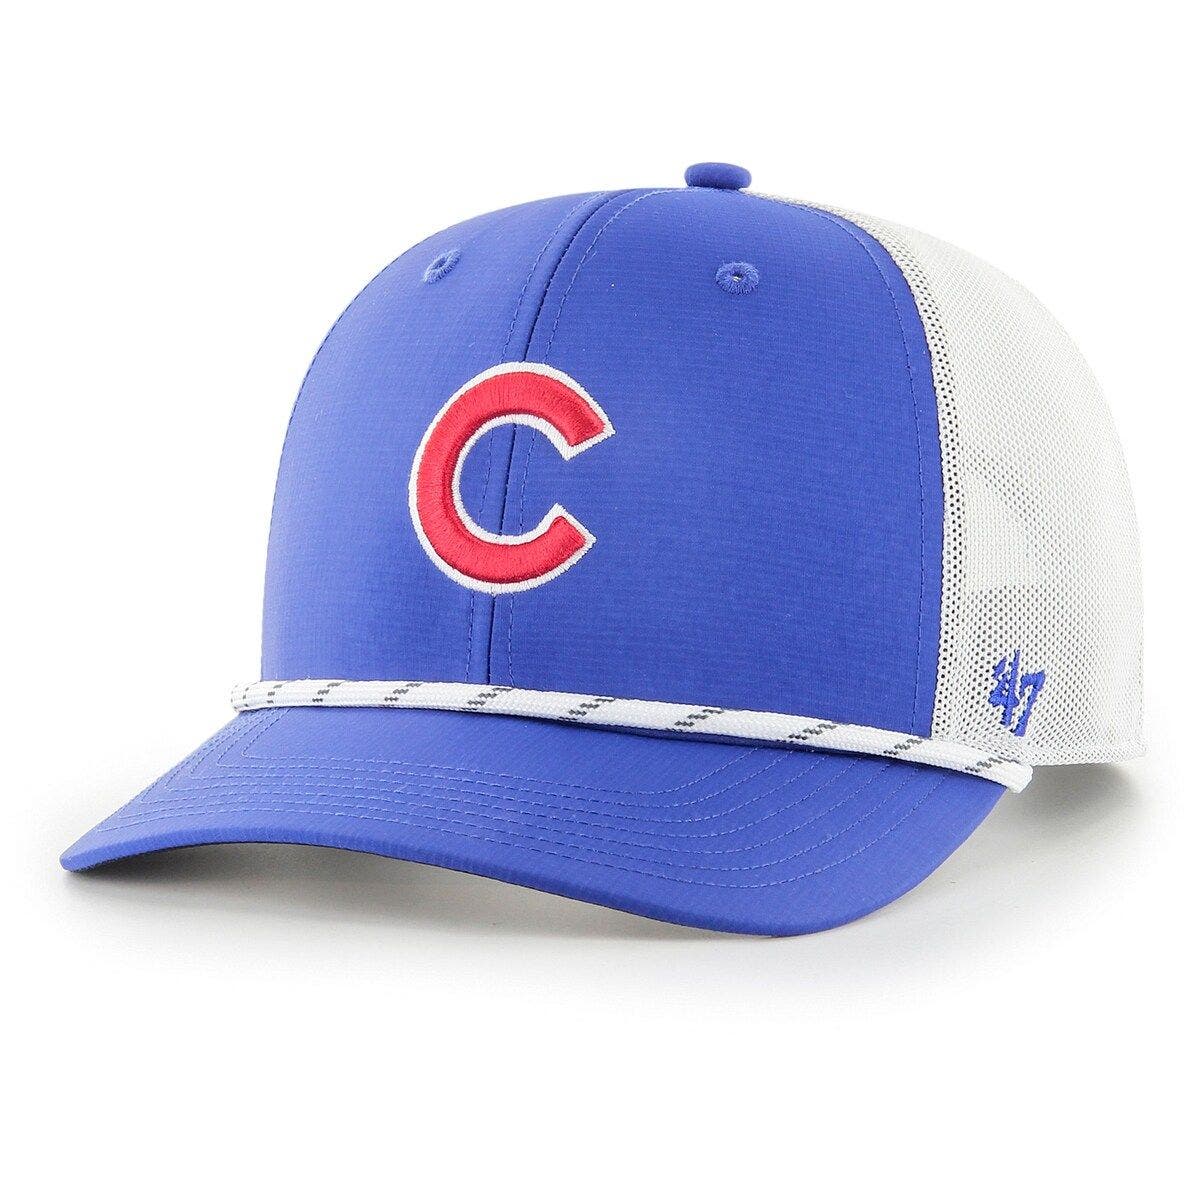 Cubs Trucker Hat mesh hat snapback hat royal blue new vintage style Chicago hat 